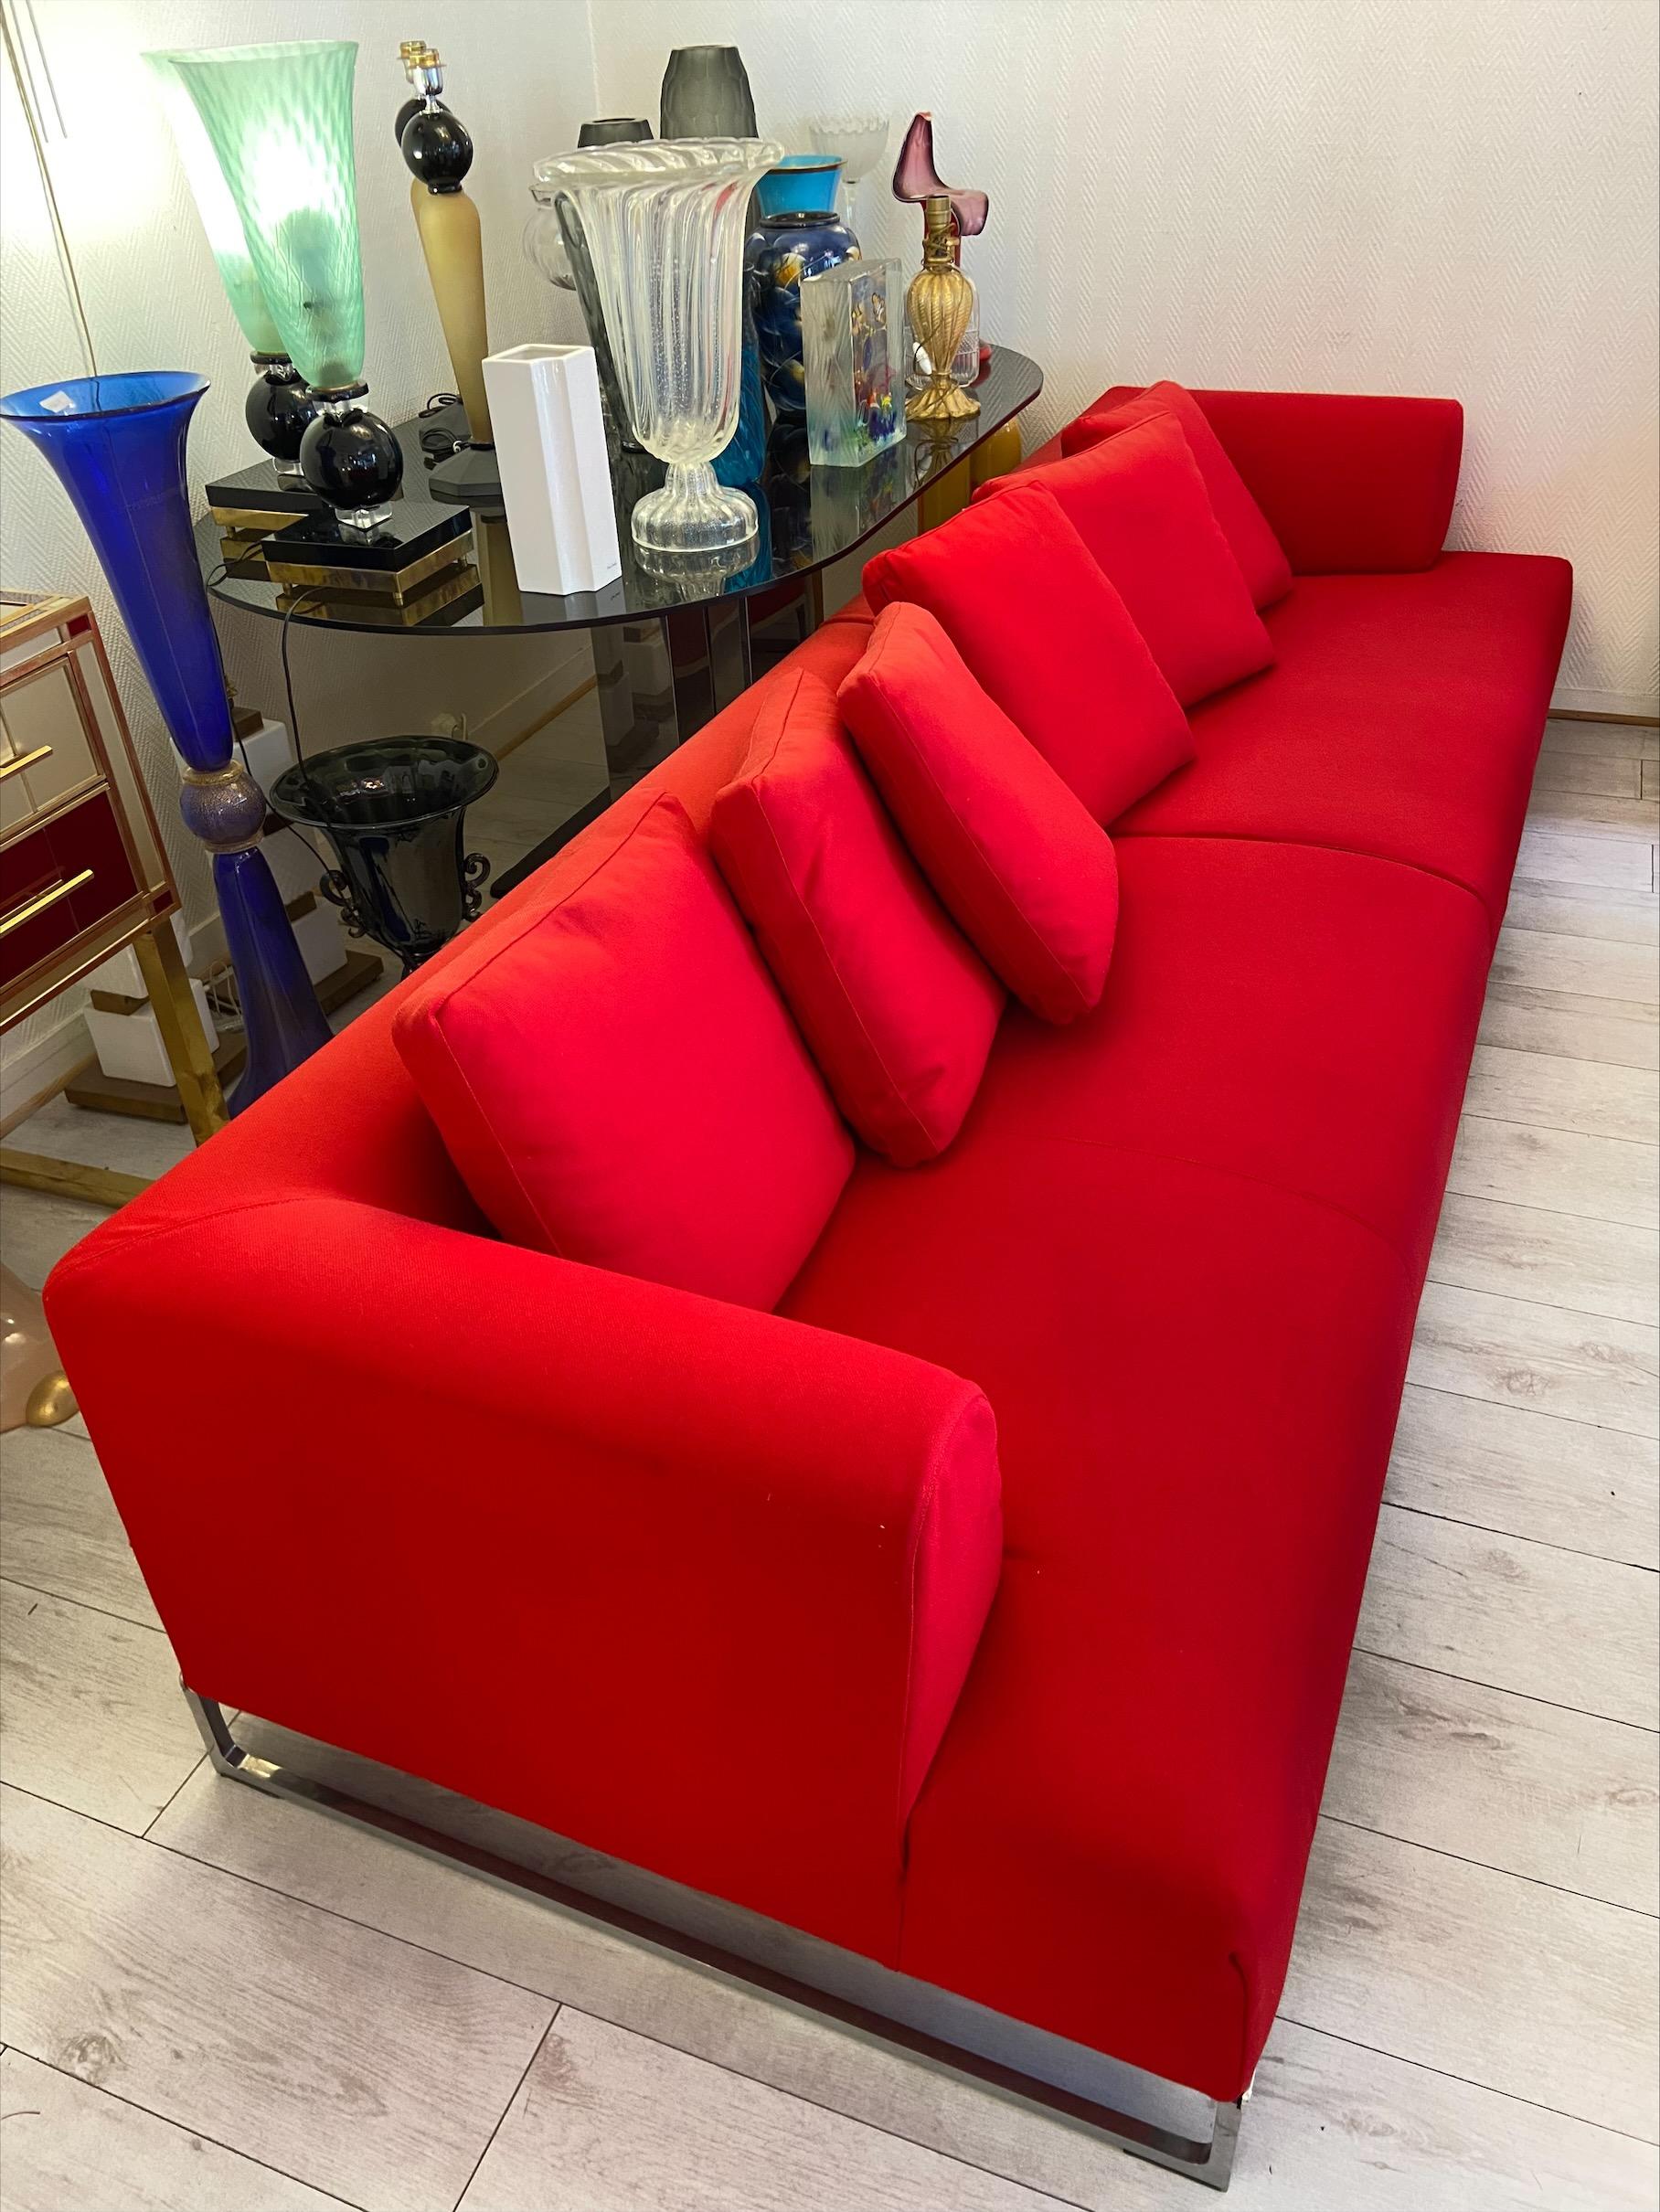 Sofa model Solo - Antonio Citterio
B&B Italia Edition
Red fabric and steel 
Measures: W 270 x D 95 x H 64 cm.
Bright chrome-plated steel 